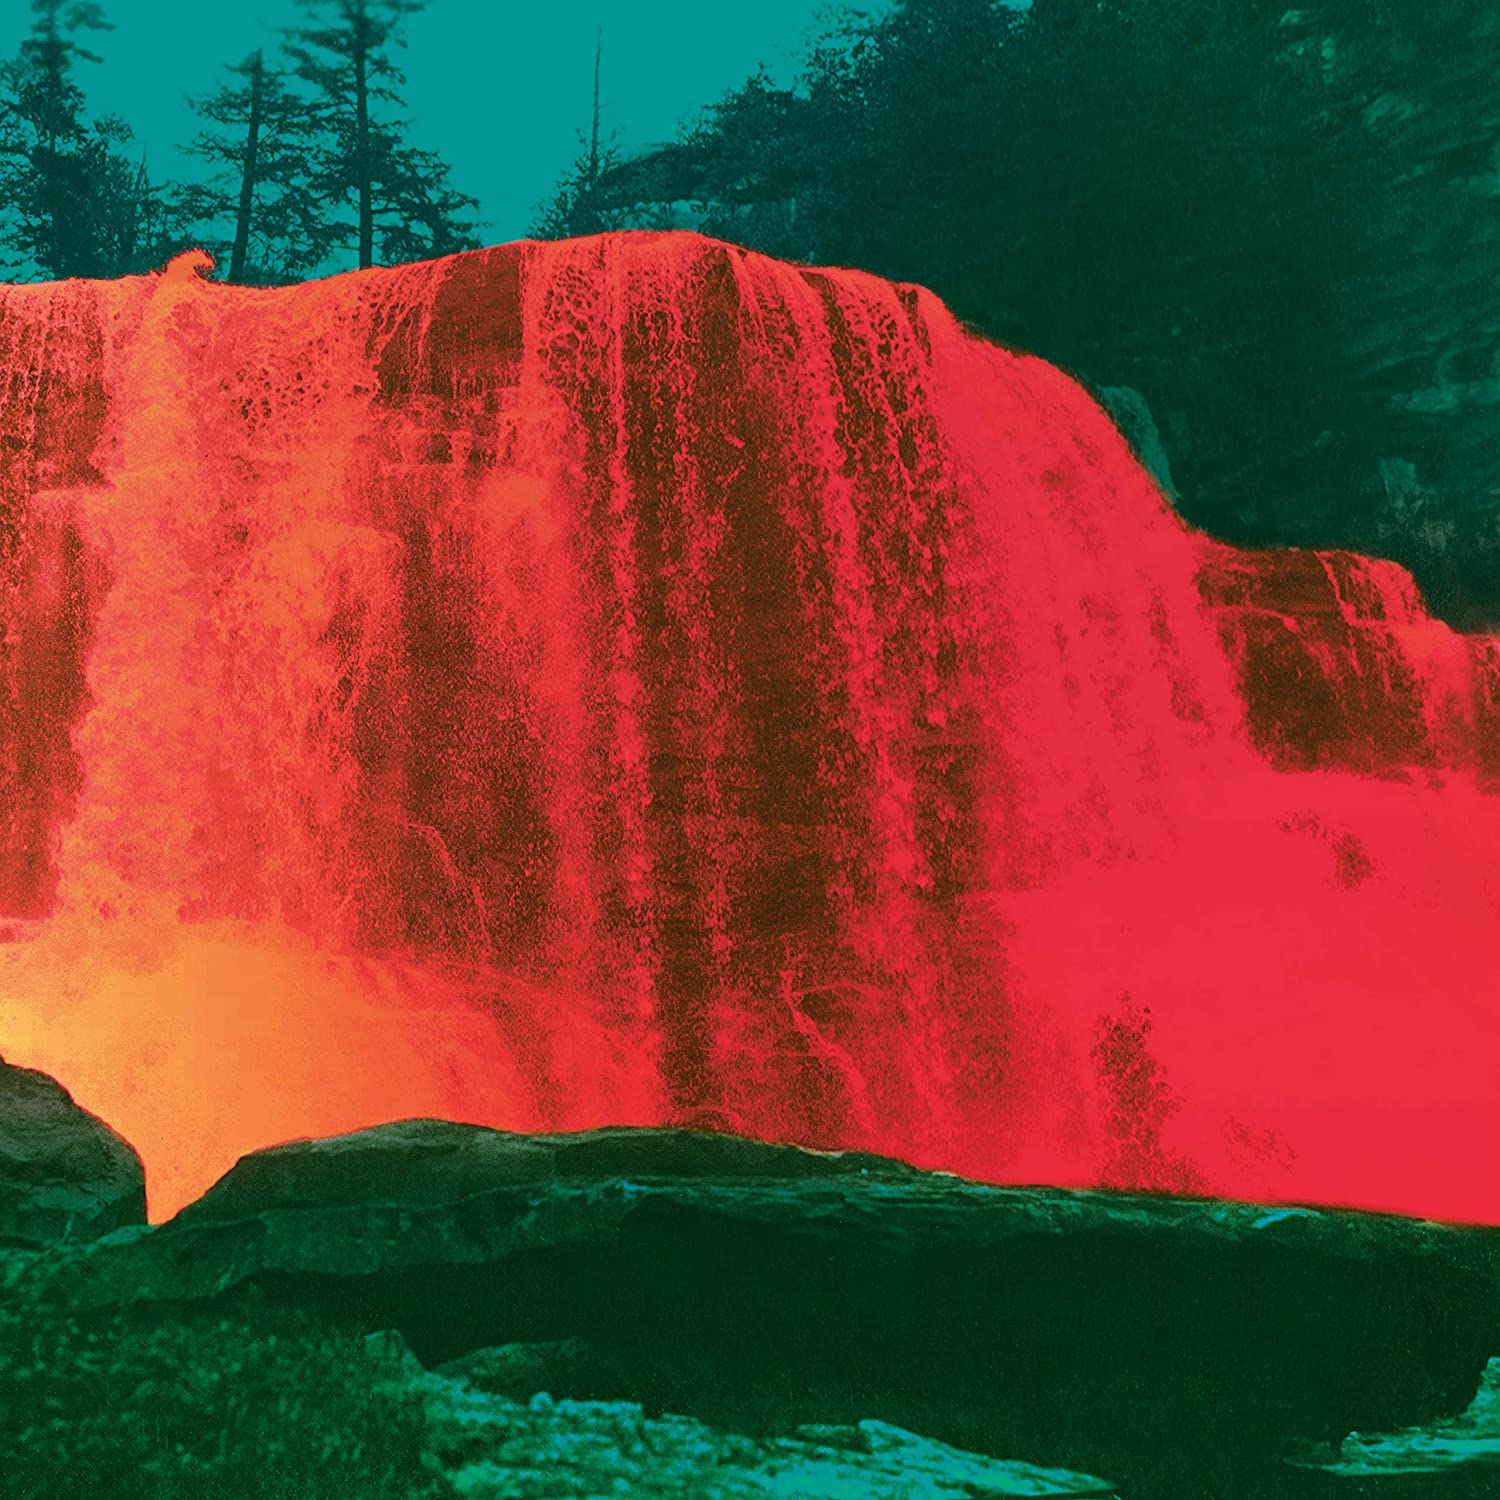 My Morning Jacket - The Waterfall II: LP Color Merlot - Indie Exclusive